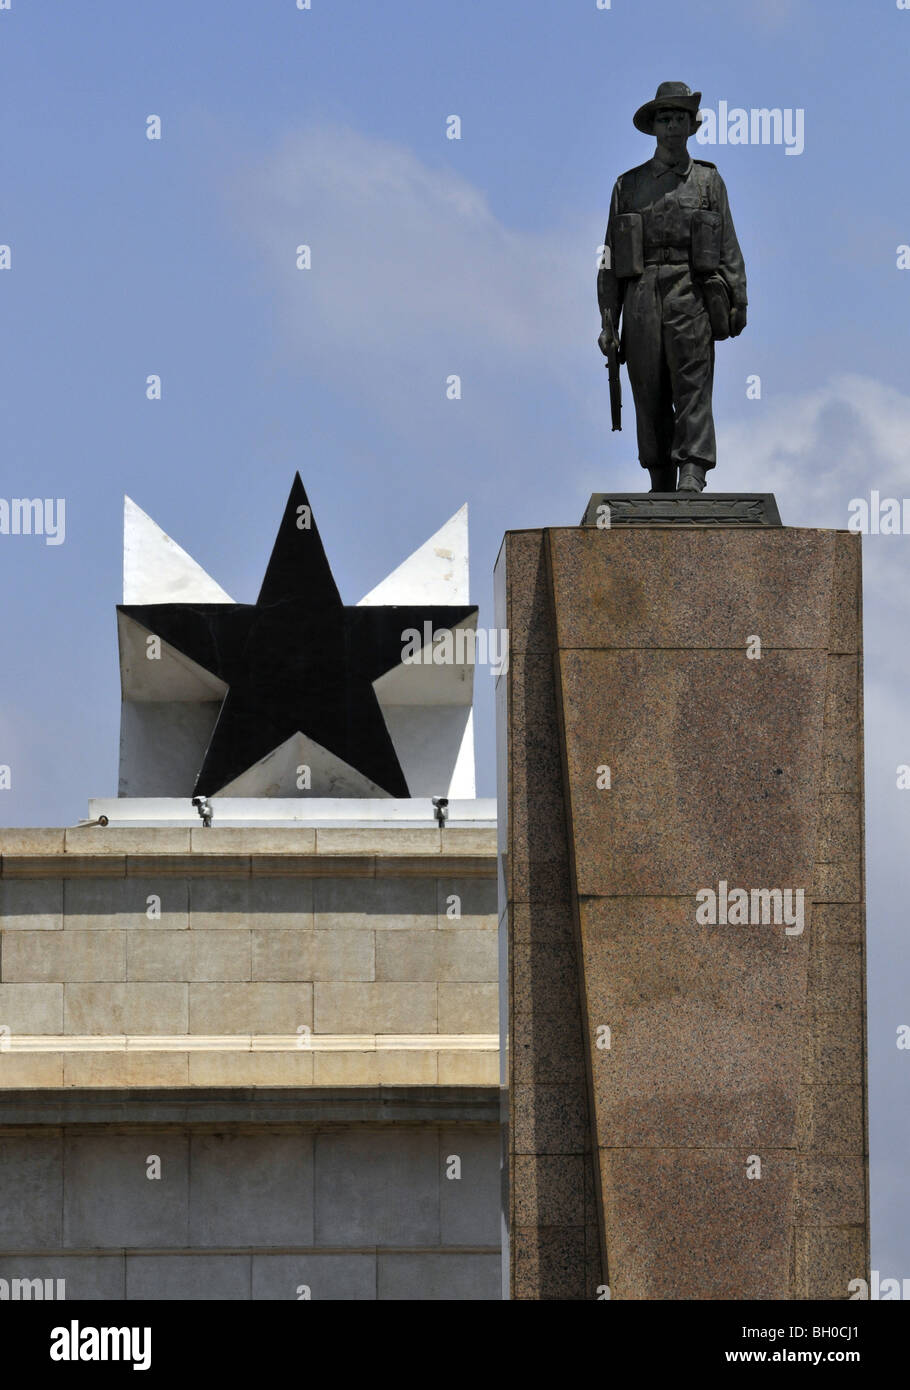 Statue in Ghana capital Stock Photo